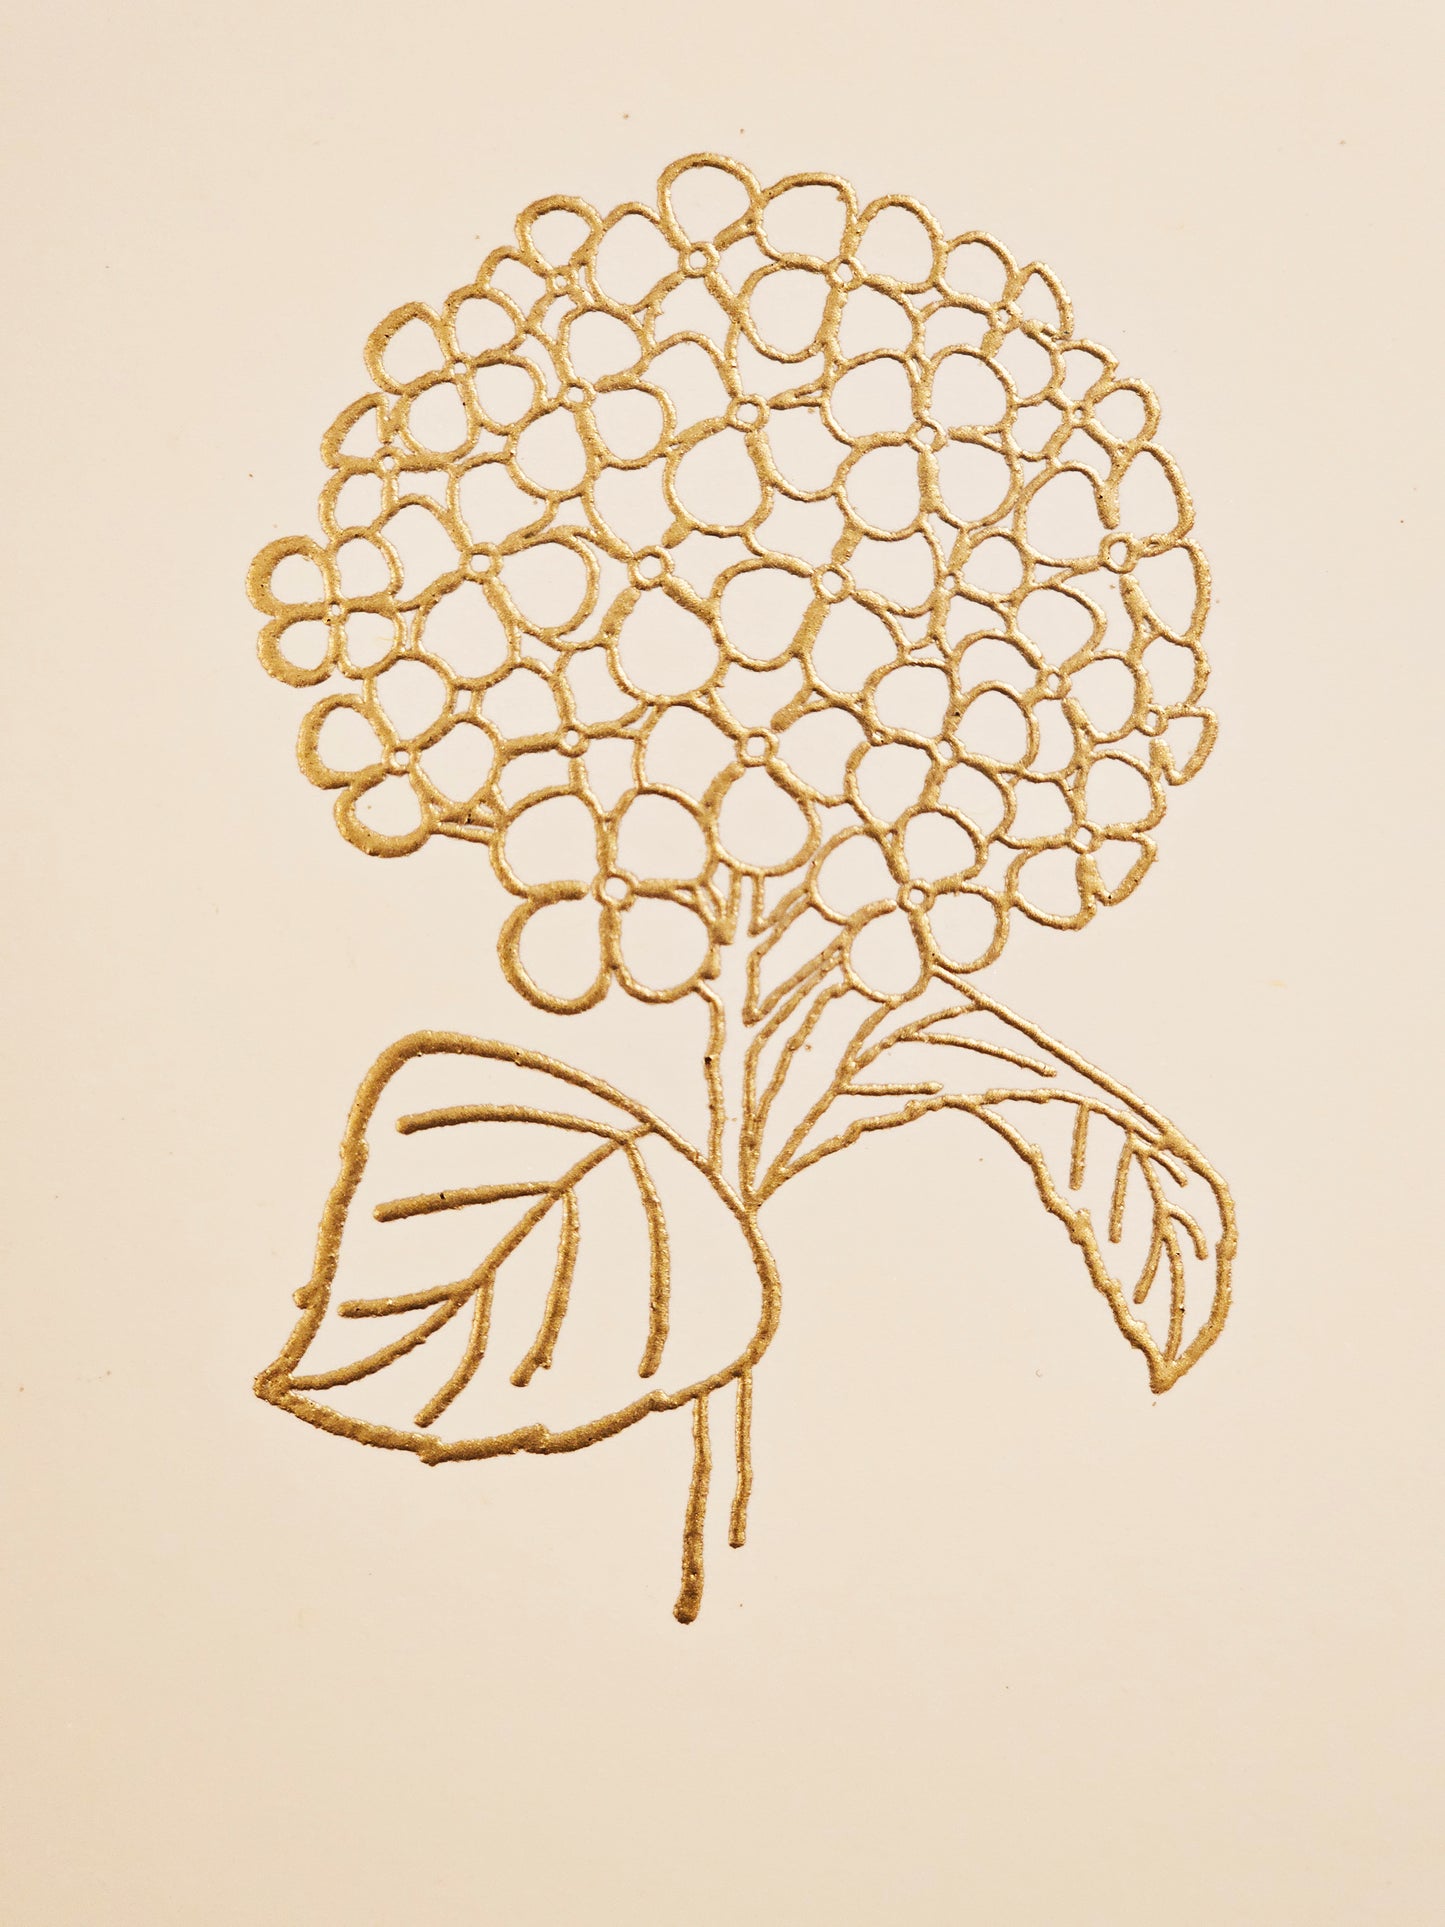 Hydrangea Blossom Cards 5/pk - Gold Embossed